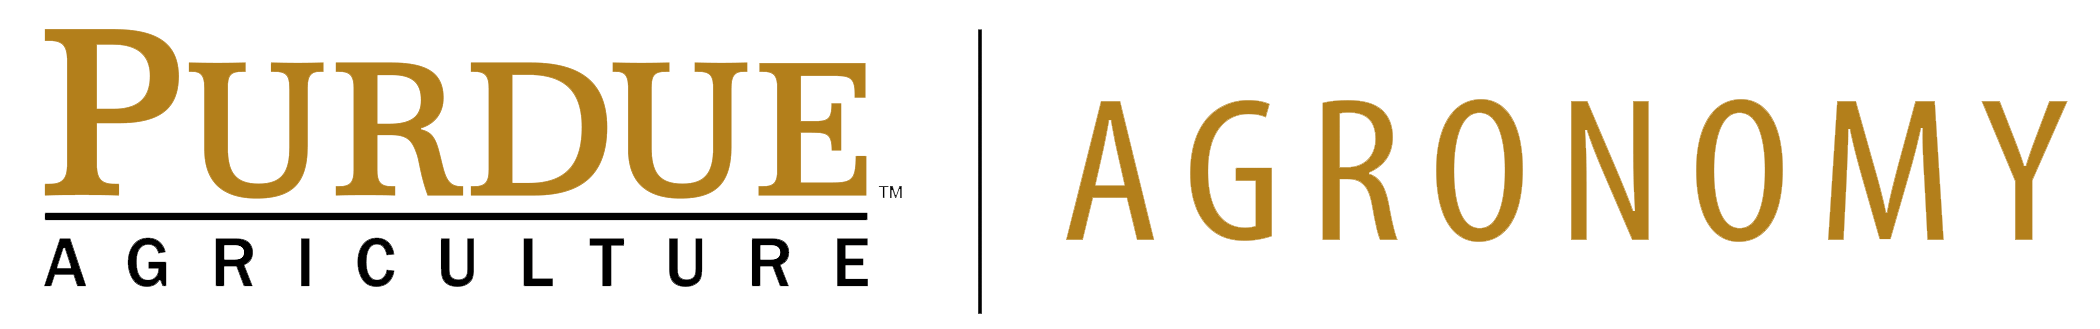 Agronomy Logo - Purdue and Agronomy Logos - Thumbnails